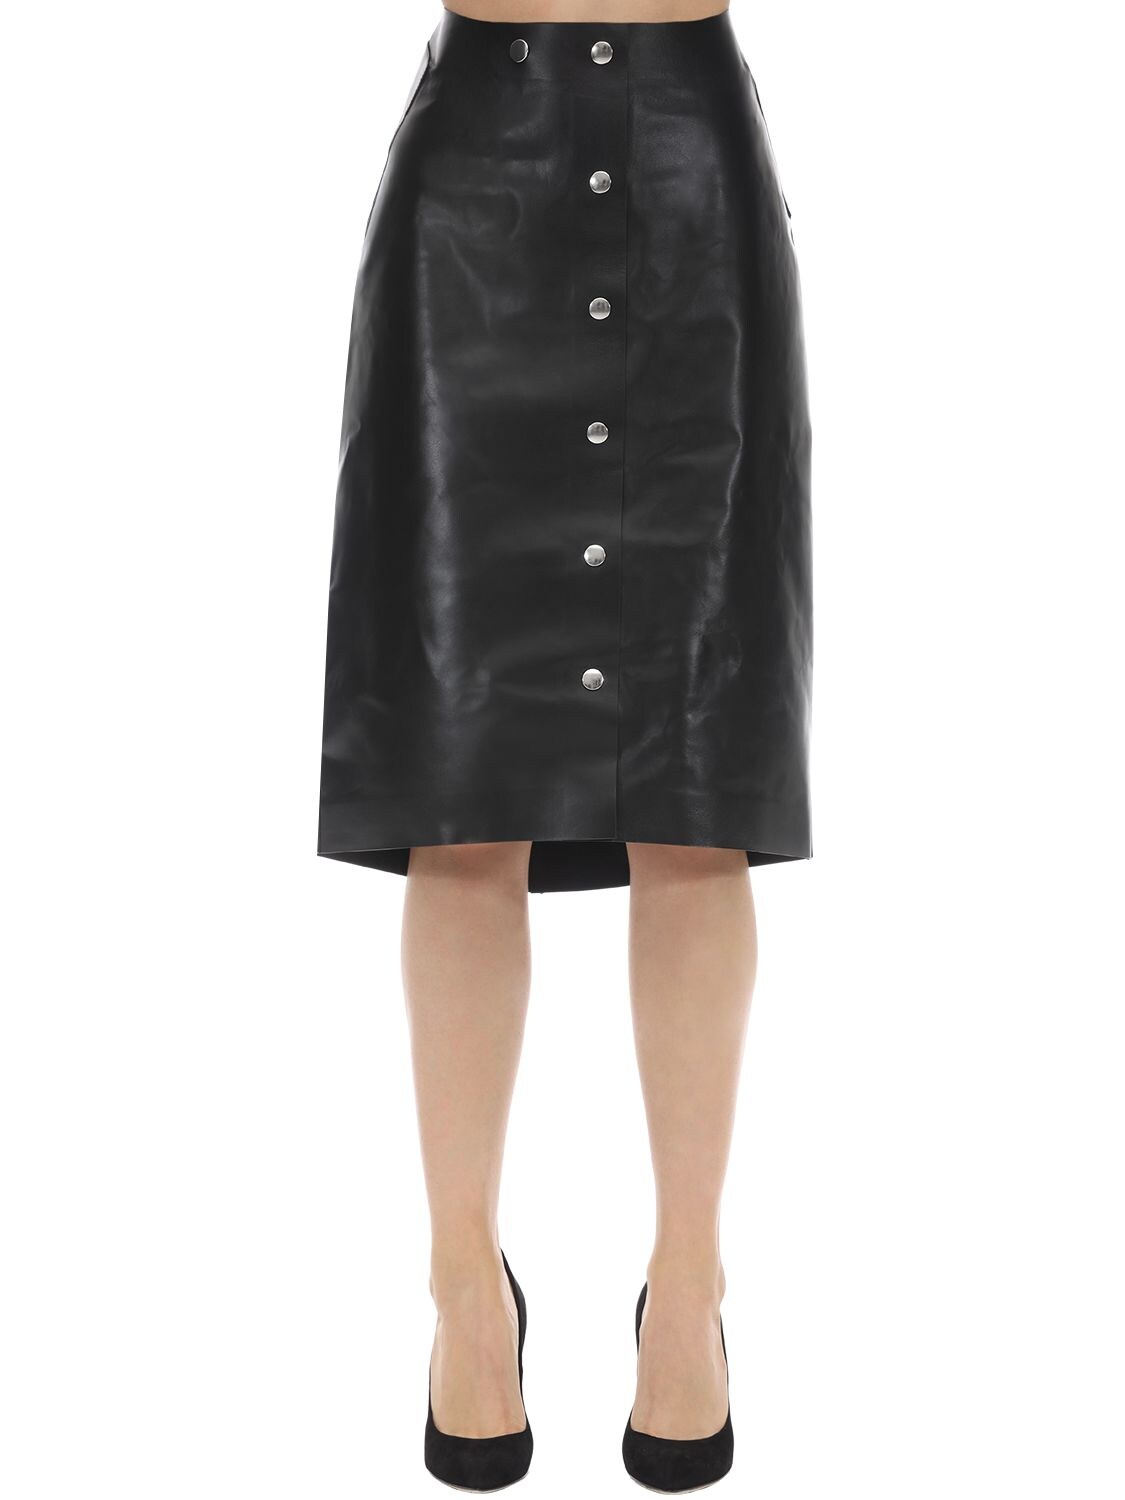 Miinto Femme Vêtements Jupes Jupes en cuir Femme Leather skirt Noir Taille: 34 FR 